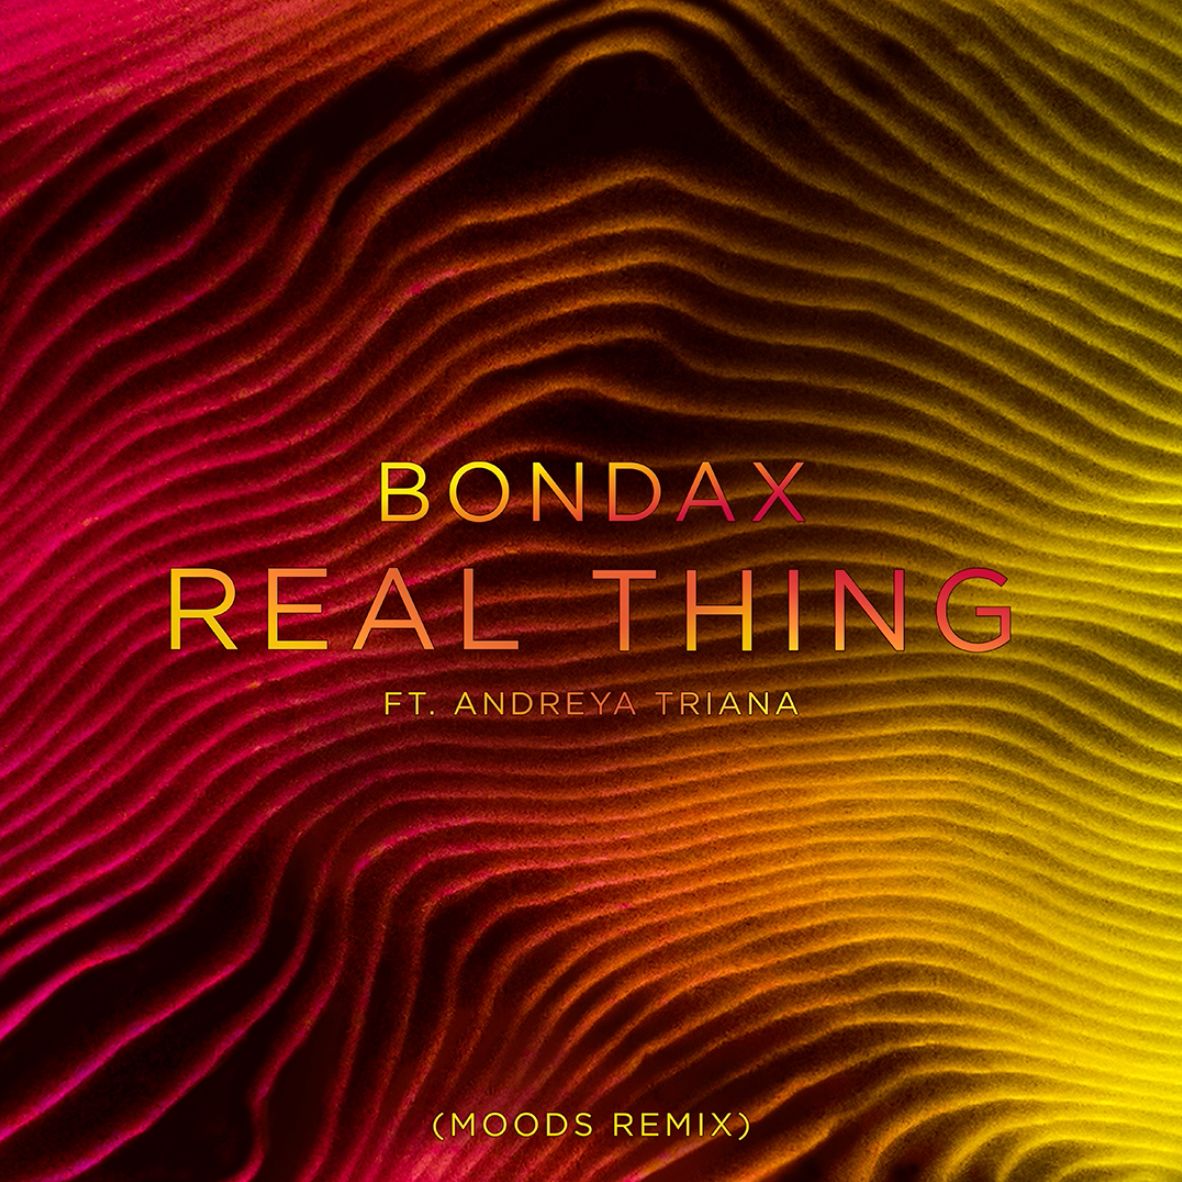 Stažení Bondax - Real Thing ft. Andreya Triana (Moods Remix)